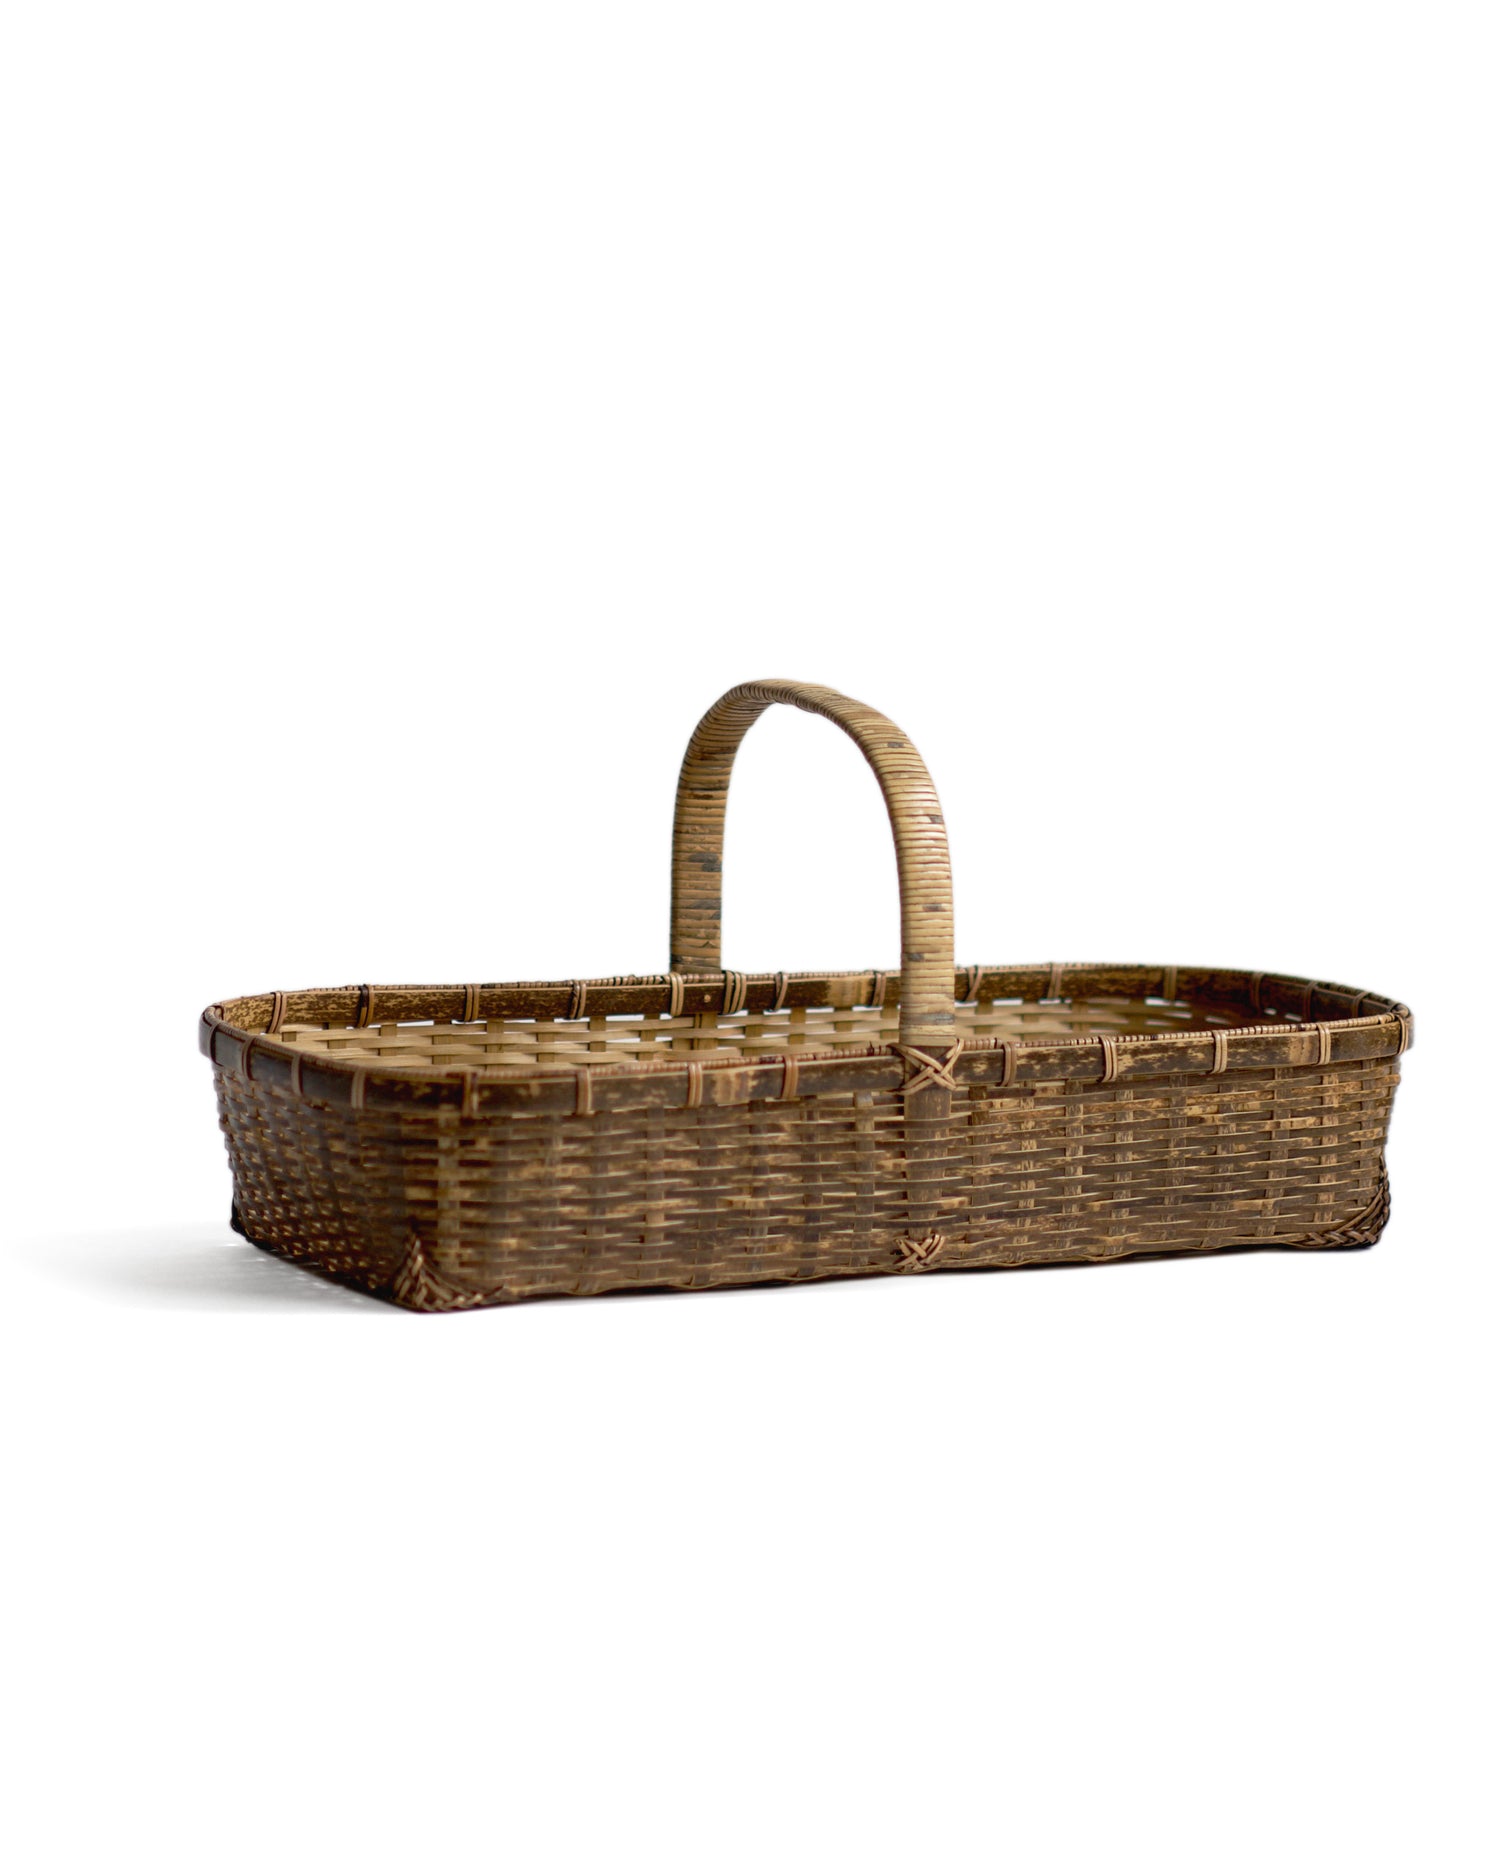 Silhouetted angled image of long toradake bread basket with handle by Kohchosai Kosuga against white background.